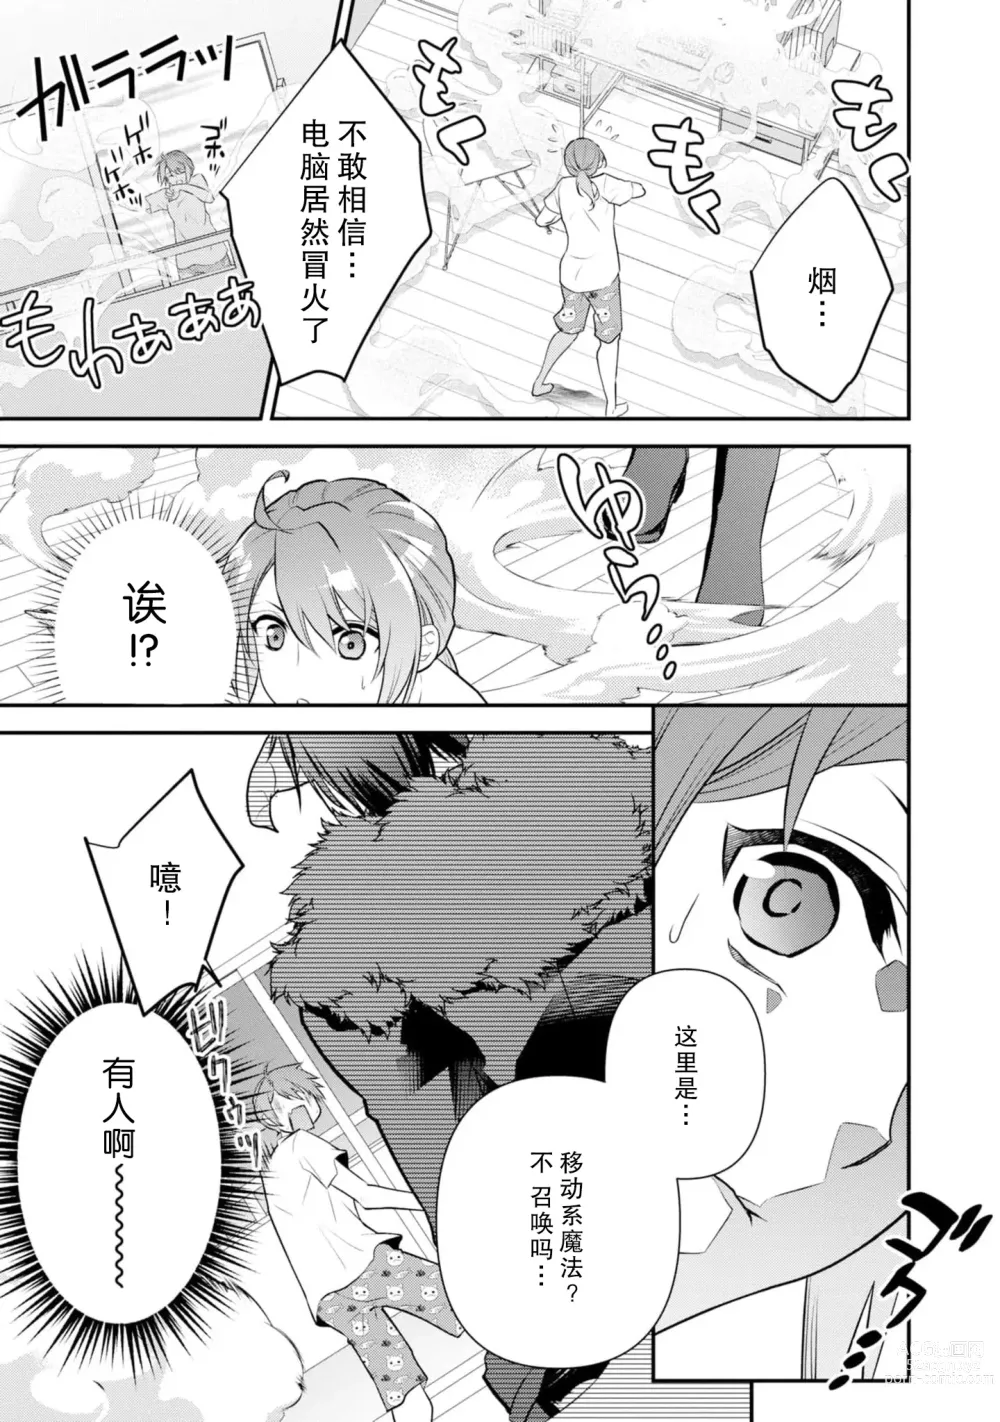 Page 14 of manga 最终BOSS转生而来，因此拿下了他的童贞 1-9 end